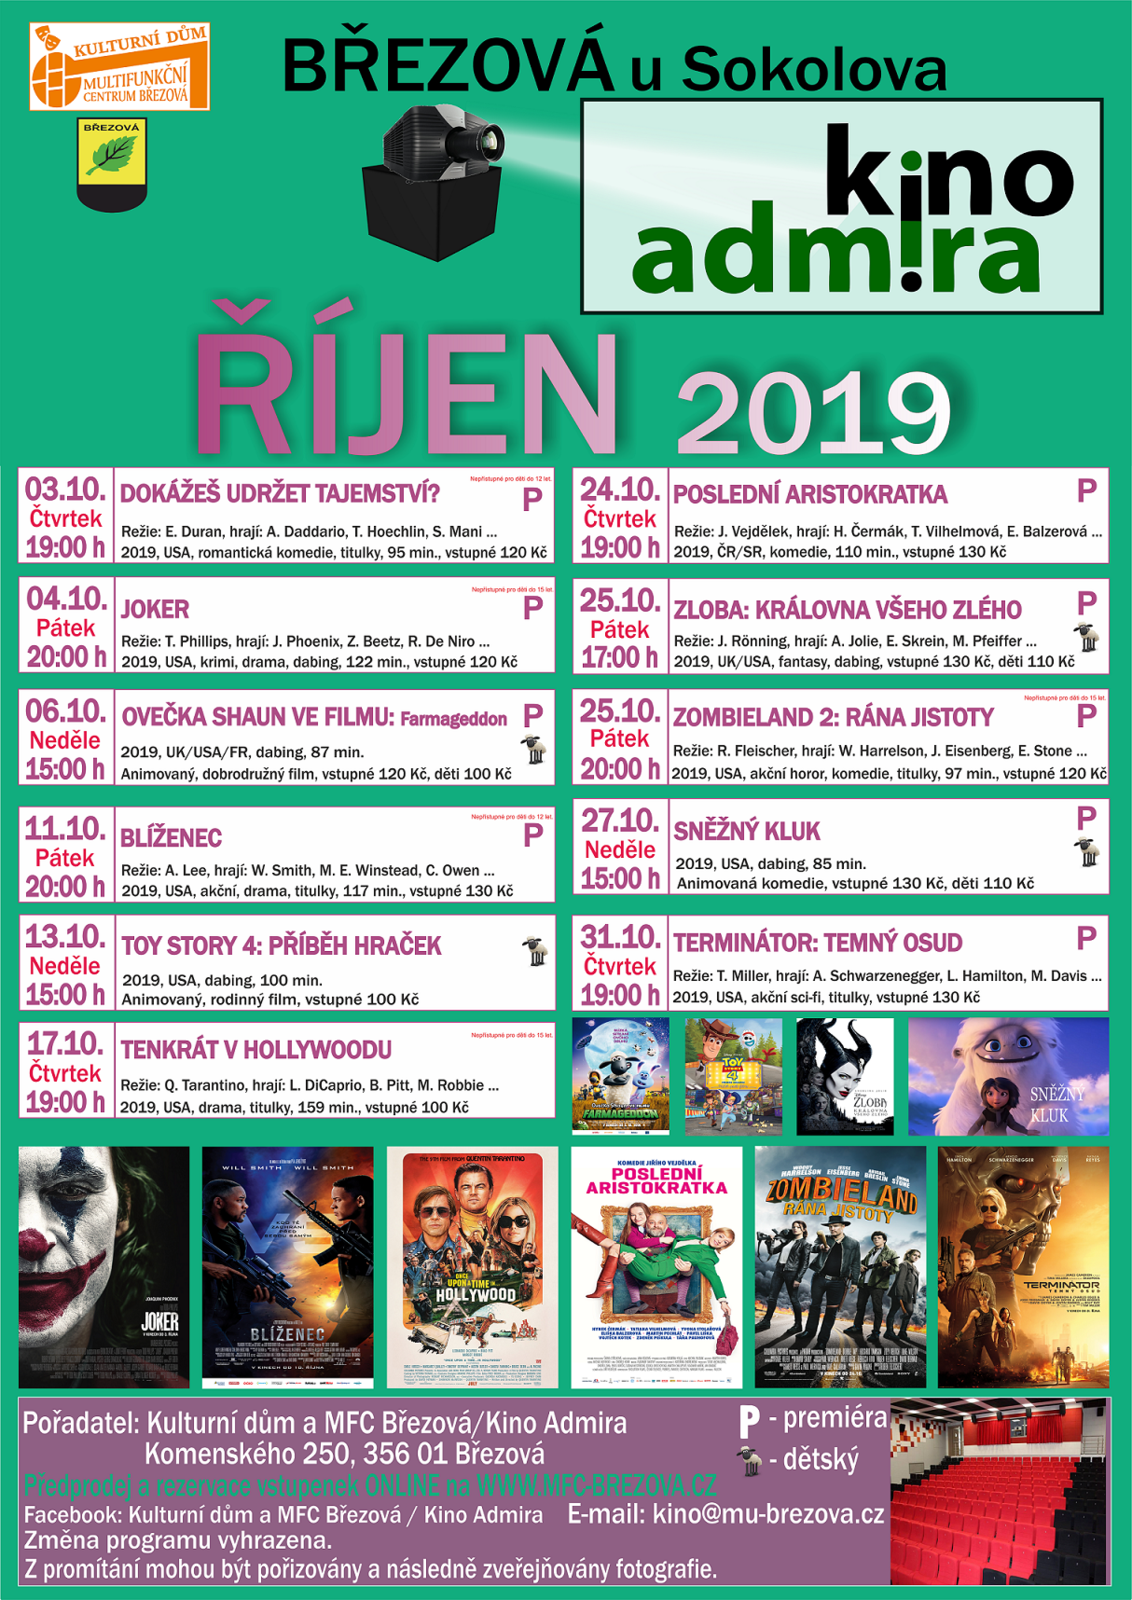 Kino Admira - rijen 2019.png